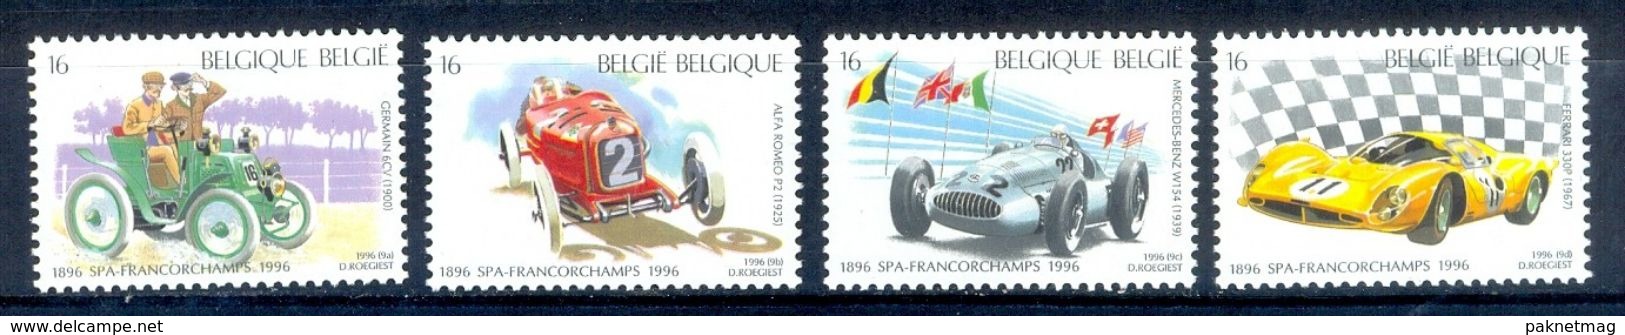 S156- België Belgique Belgium 1996. Oldtimer Racing Cars. Flag. Tree. - Unused Stamps